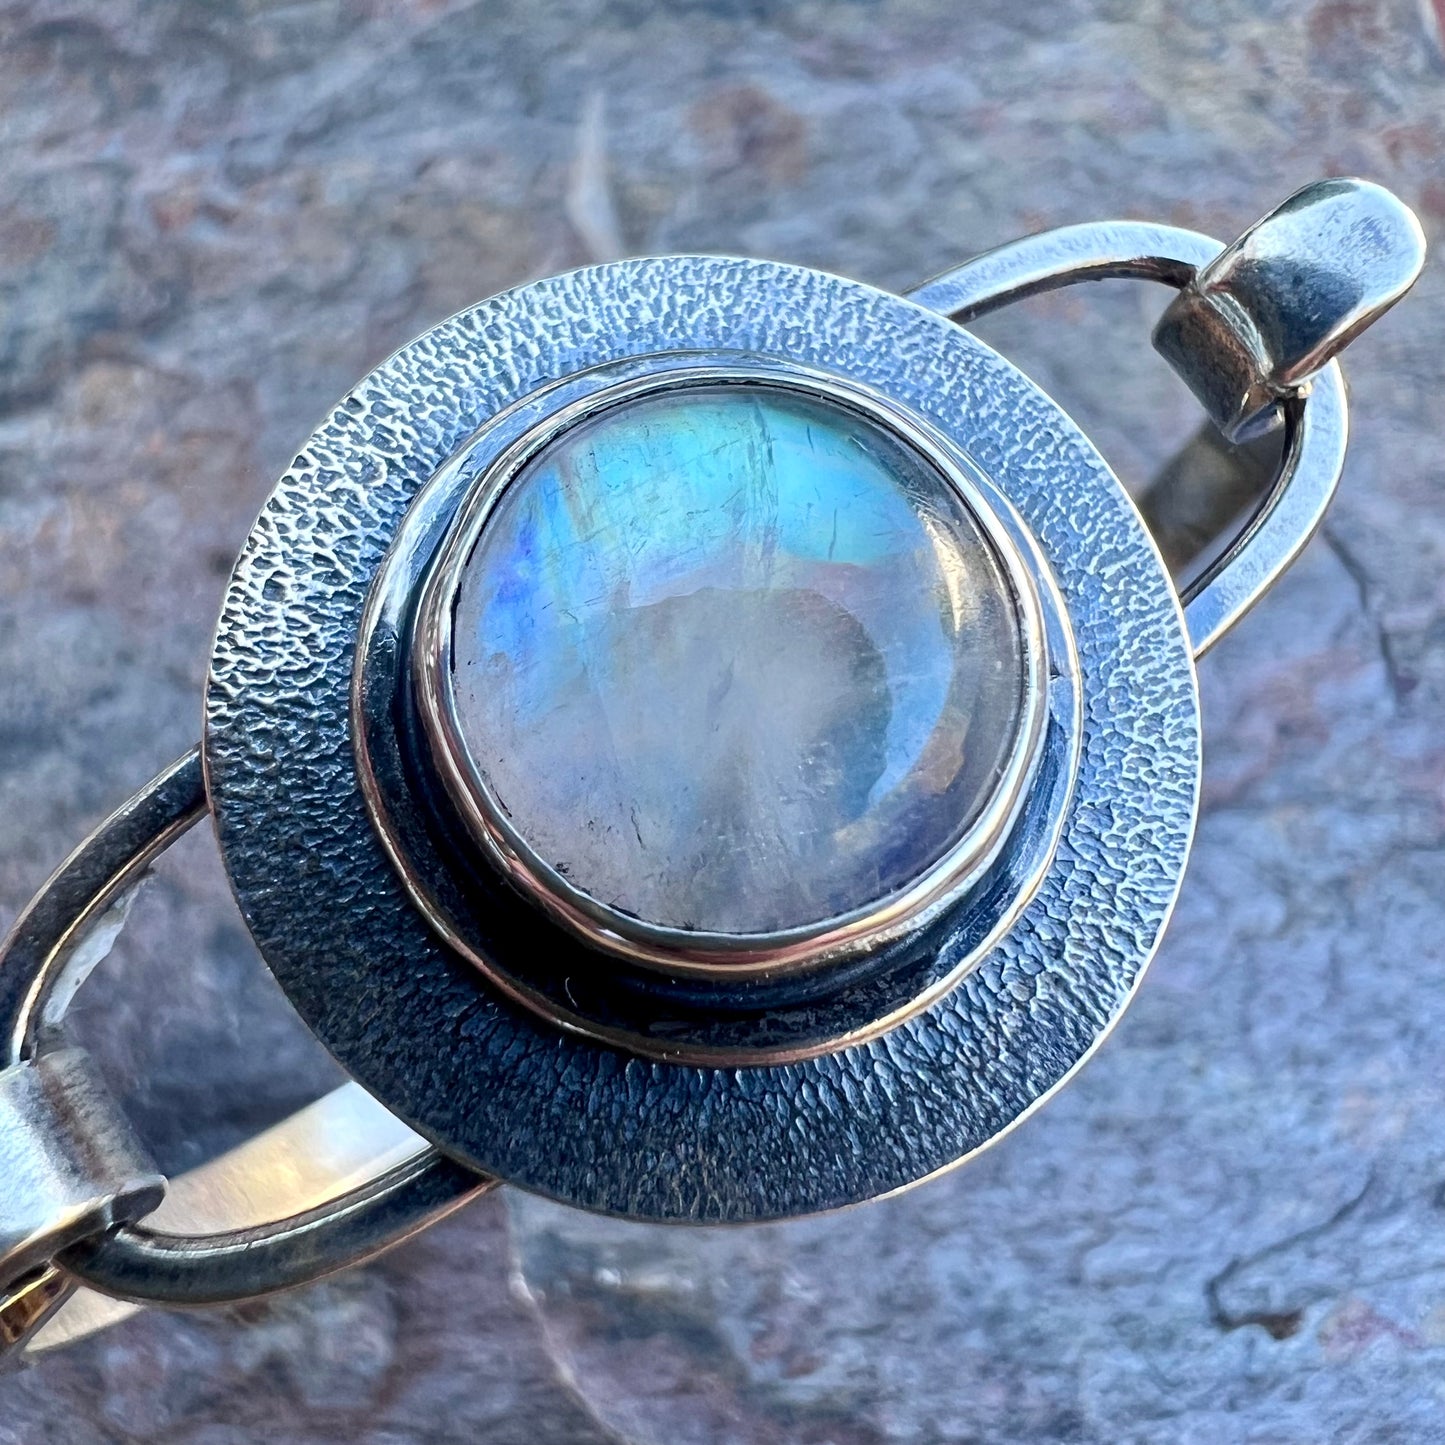 Rainbow Moonstone Sterling Silver Bracelet - Handmade One-of-a-kind Tension Cuff Bracelet